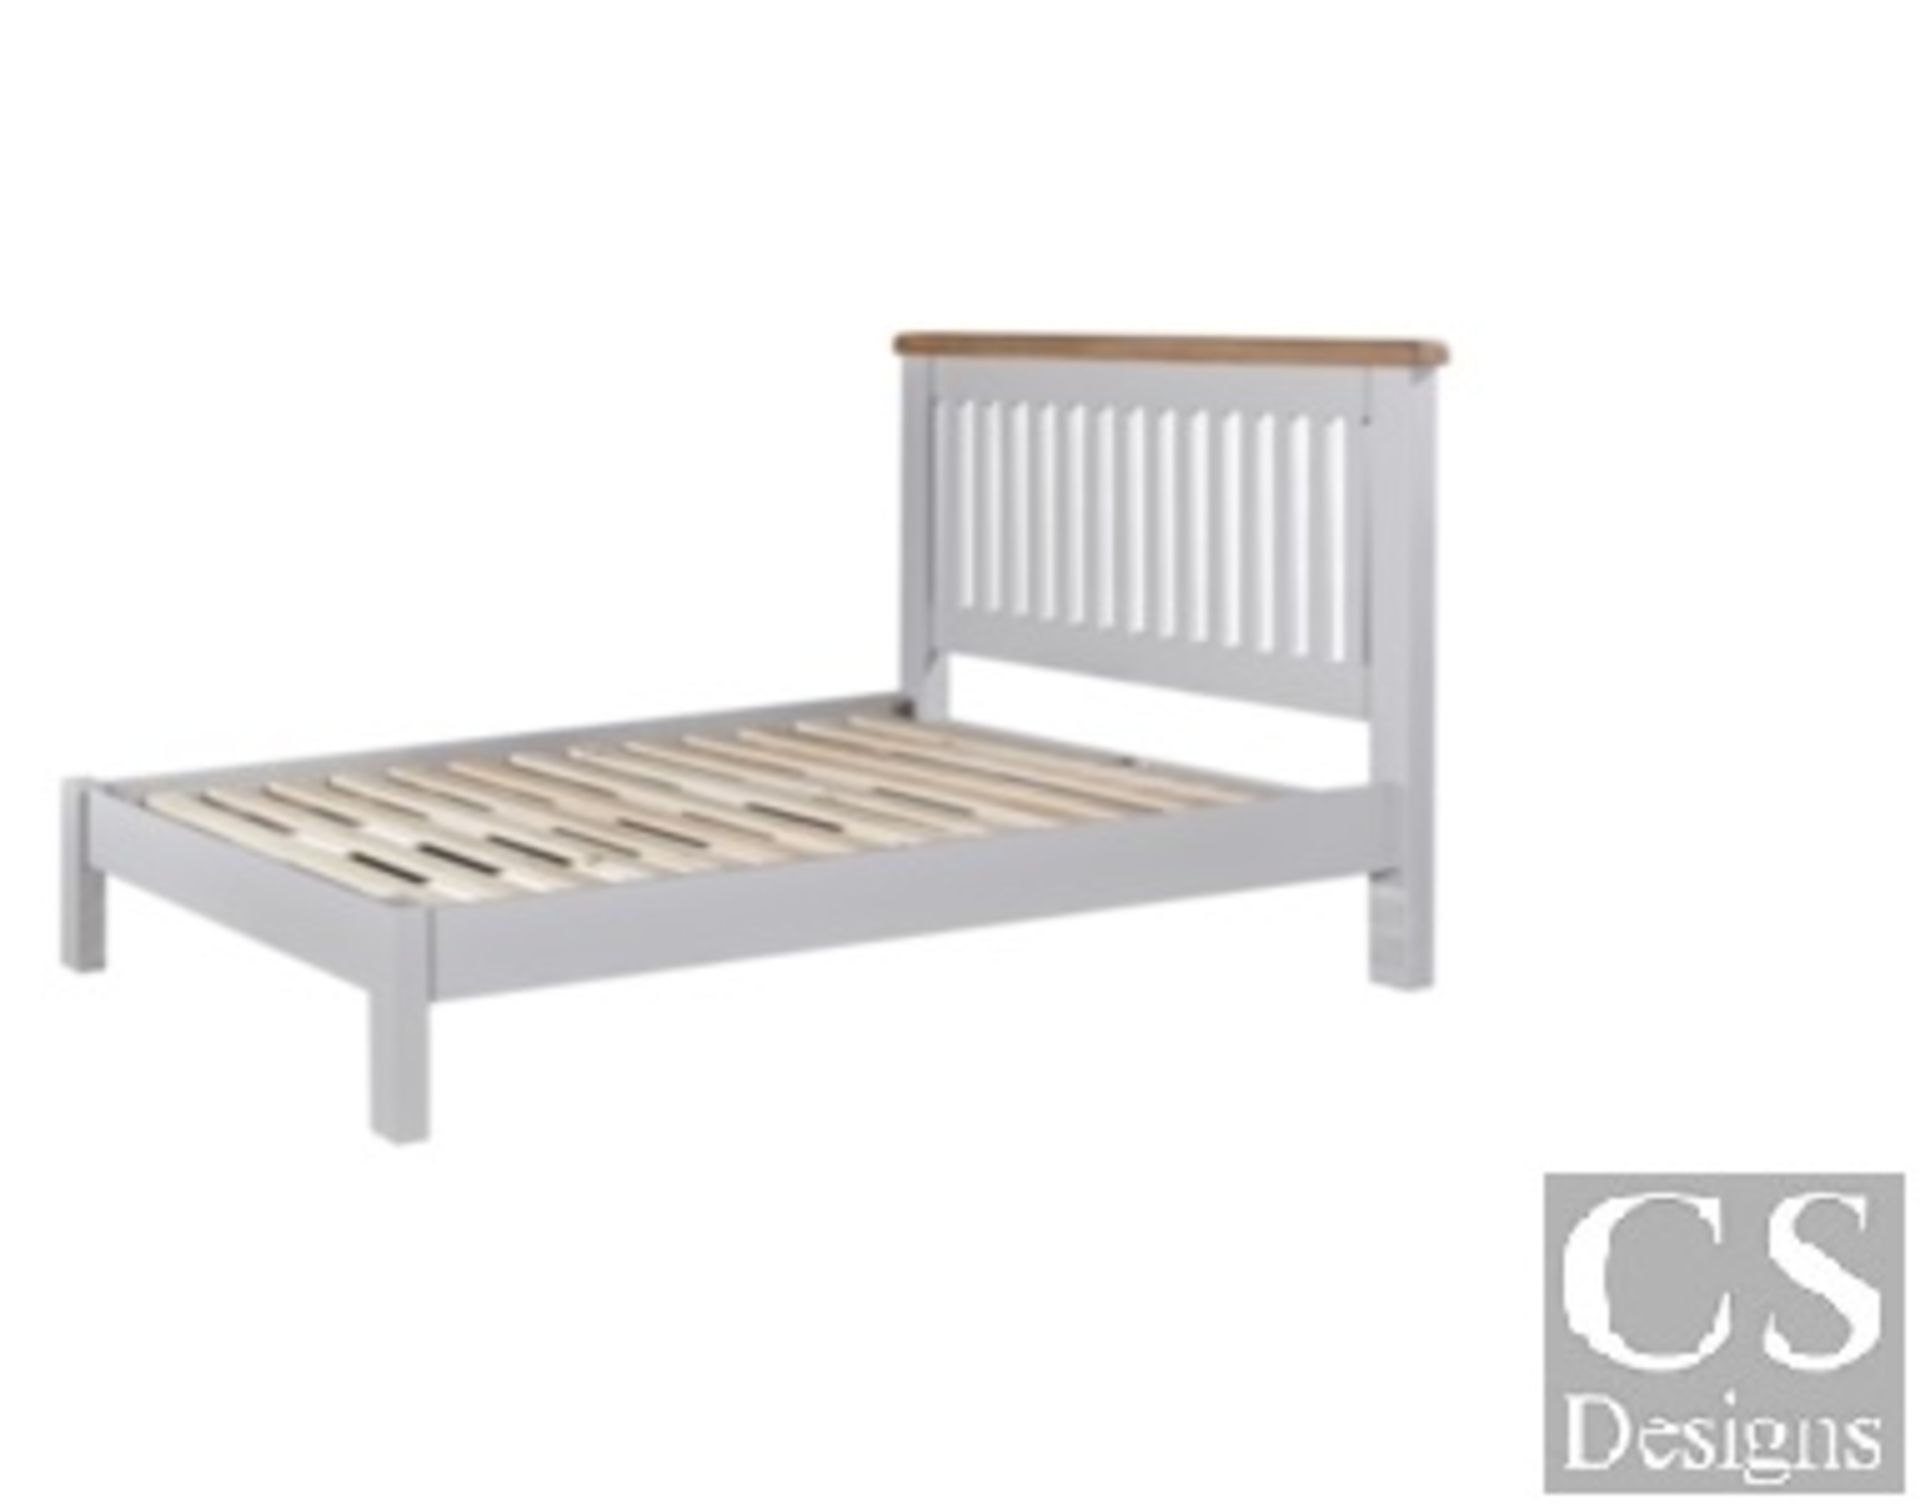 + VAT Brand New CS Designs "Daylesford" King Size Bed Frame With Natural Oak & Solid Hardwood - Image 3 of 3